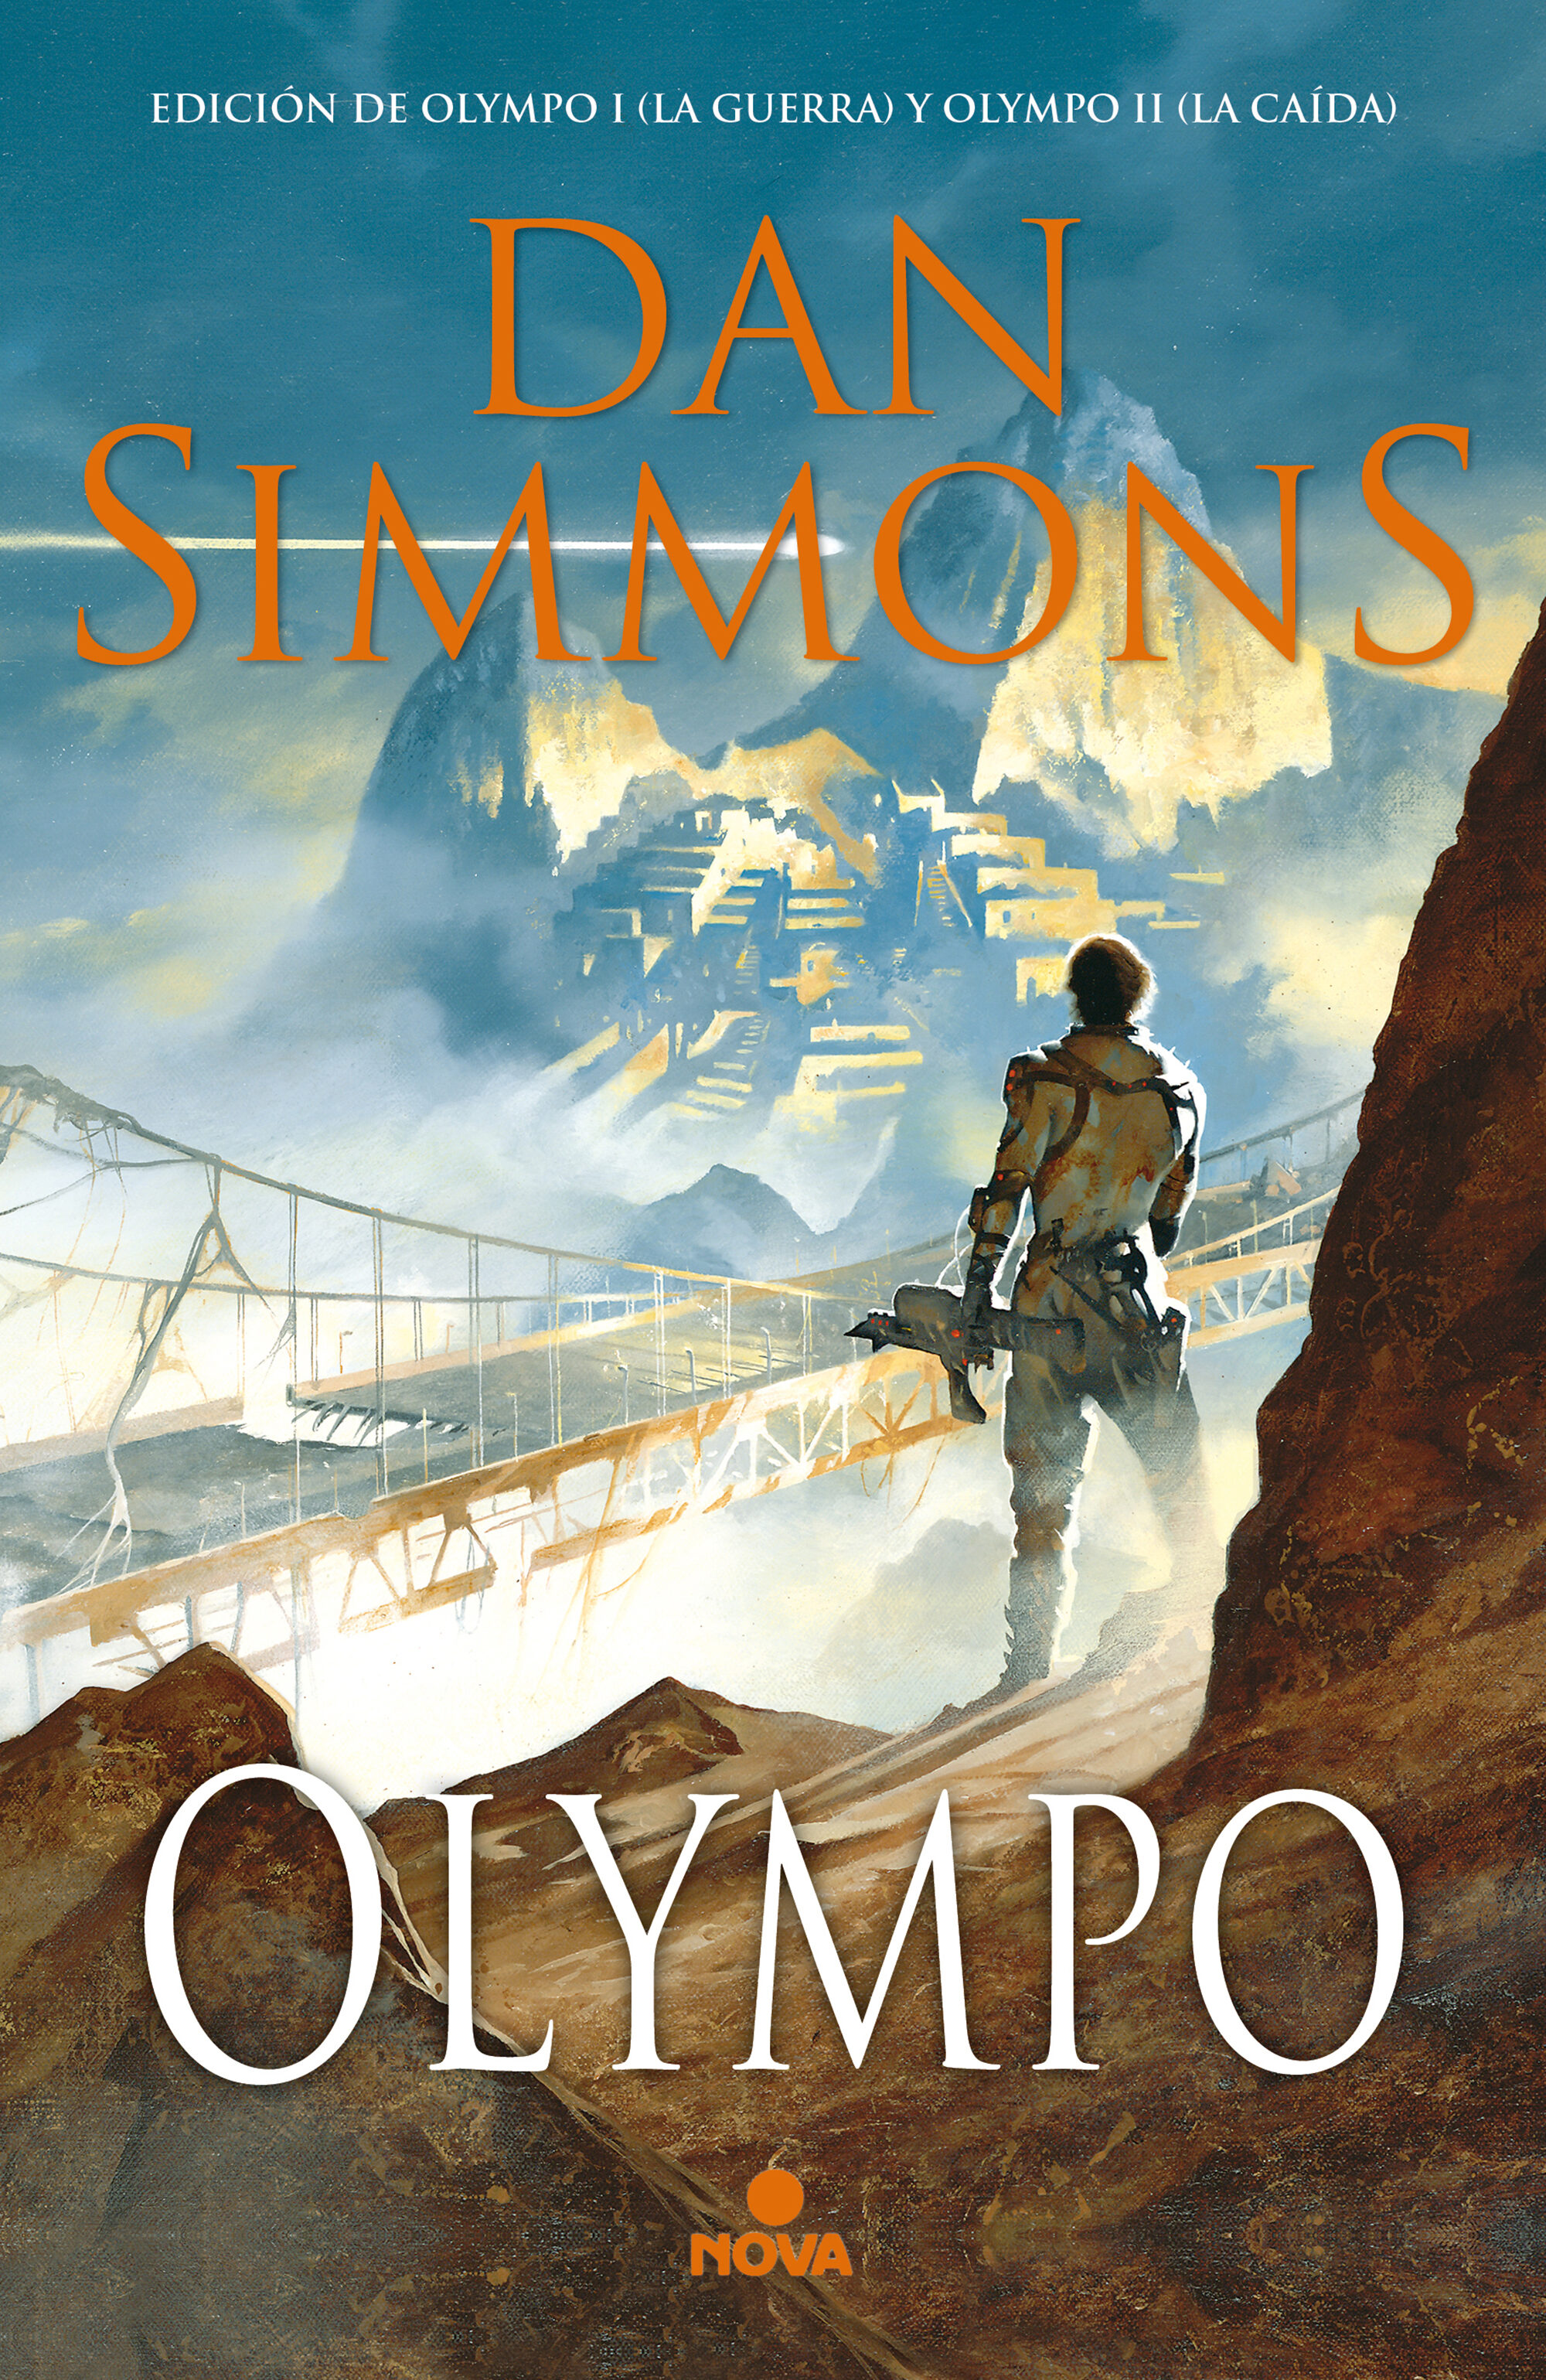 Rafael Marín Trechera, Dan Simmons: Olympo (Spanish language, 2019, Nova)